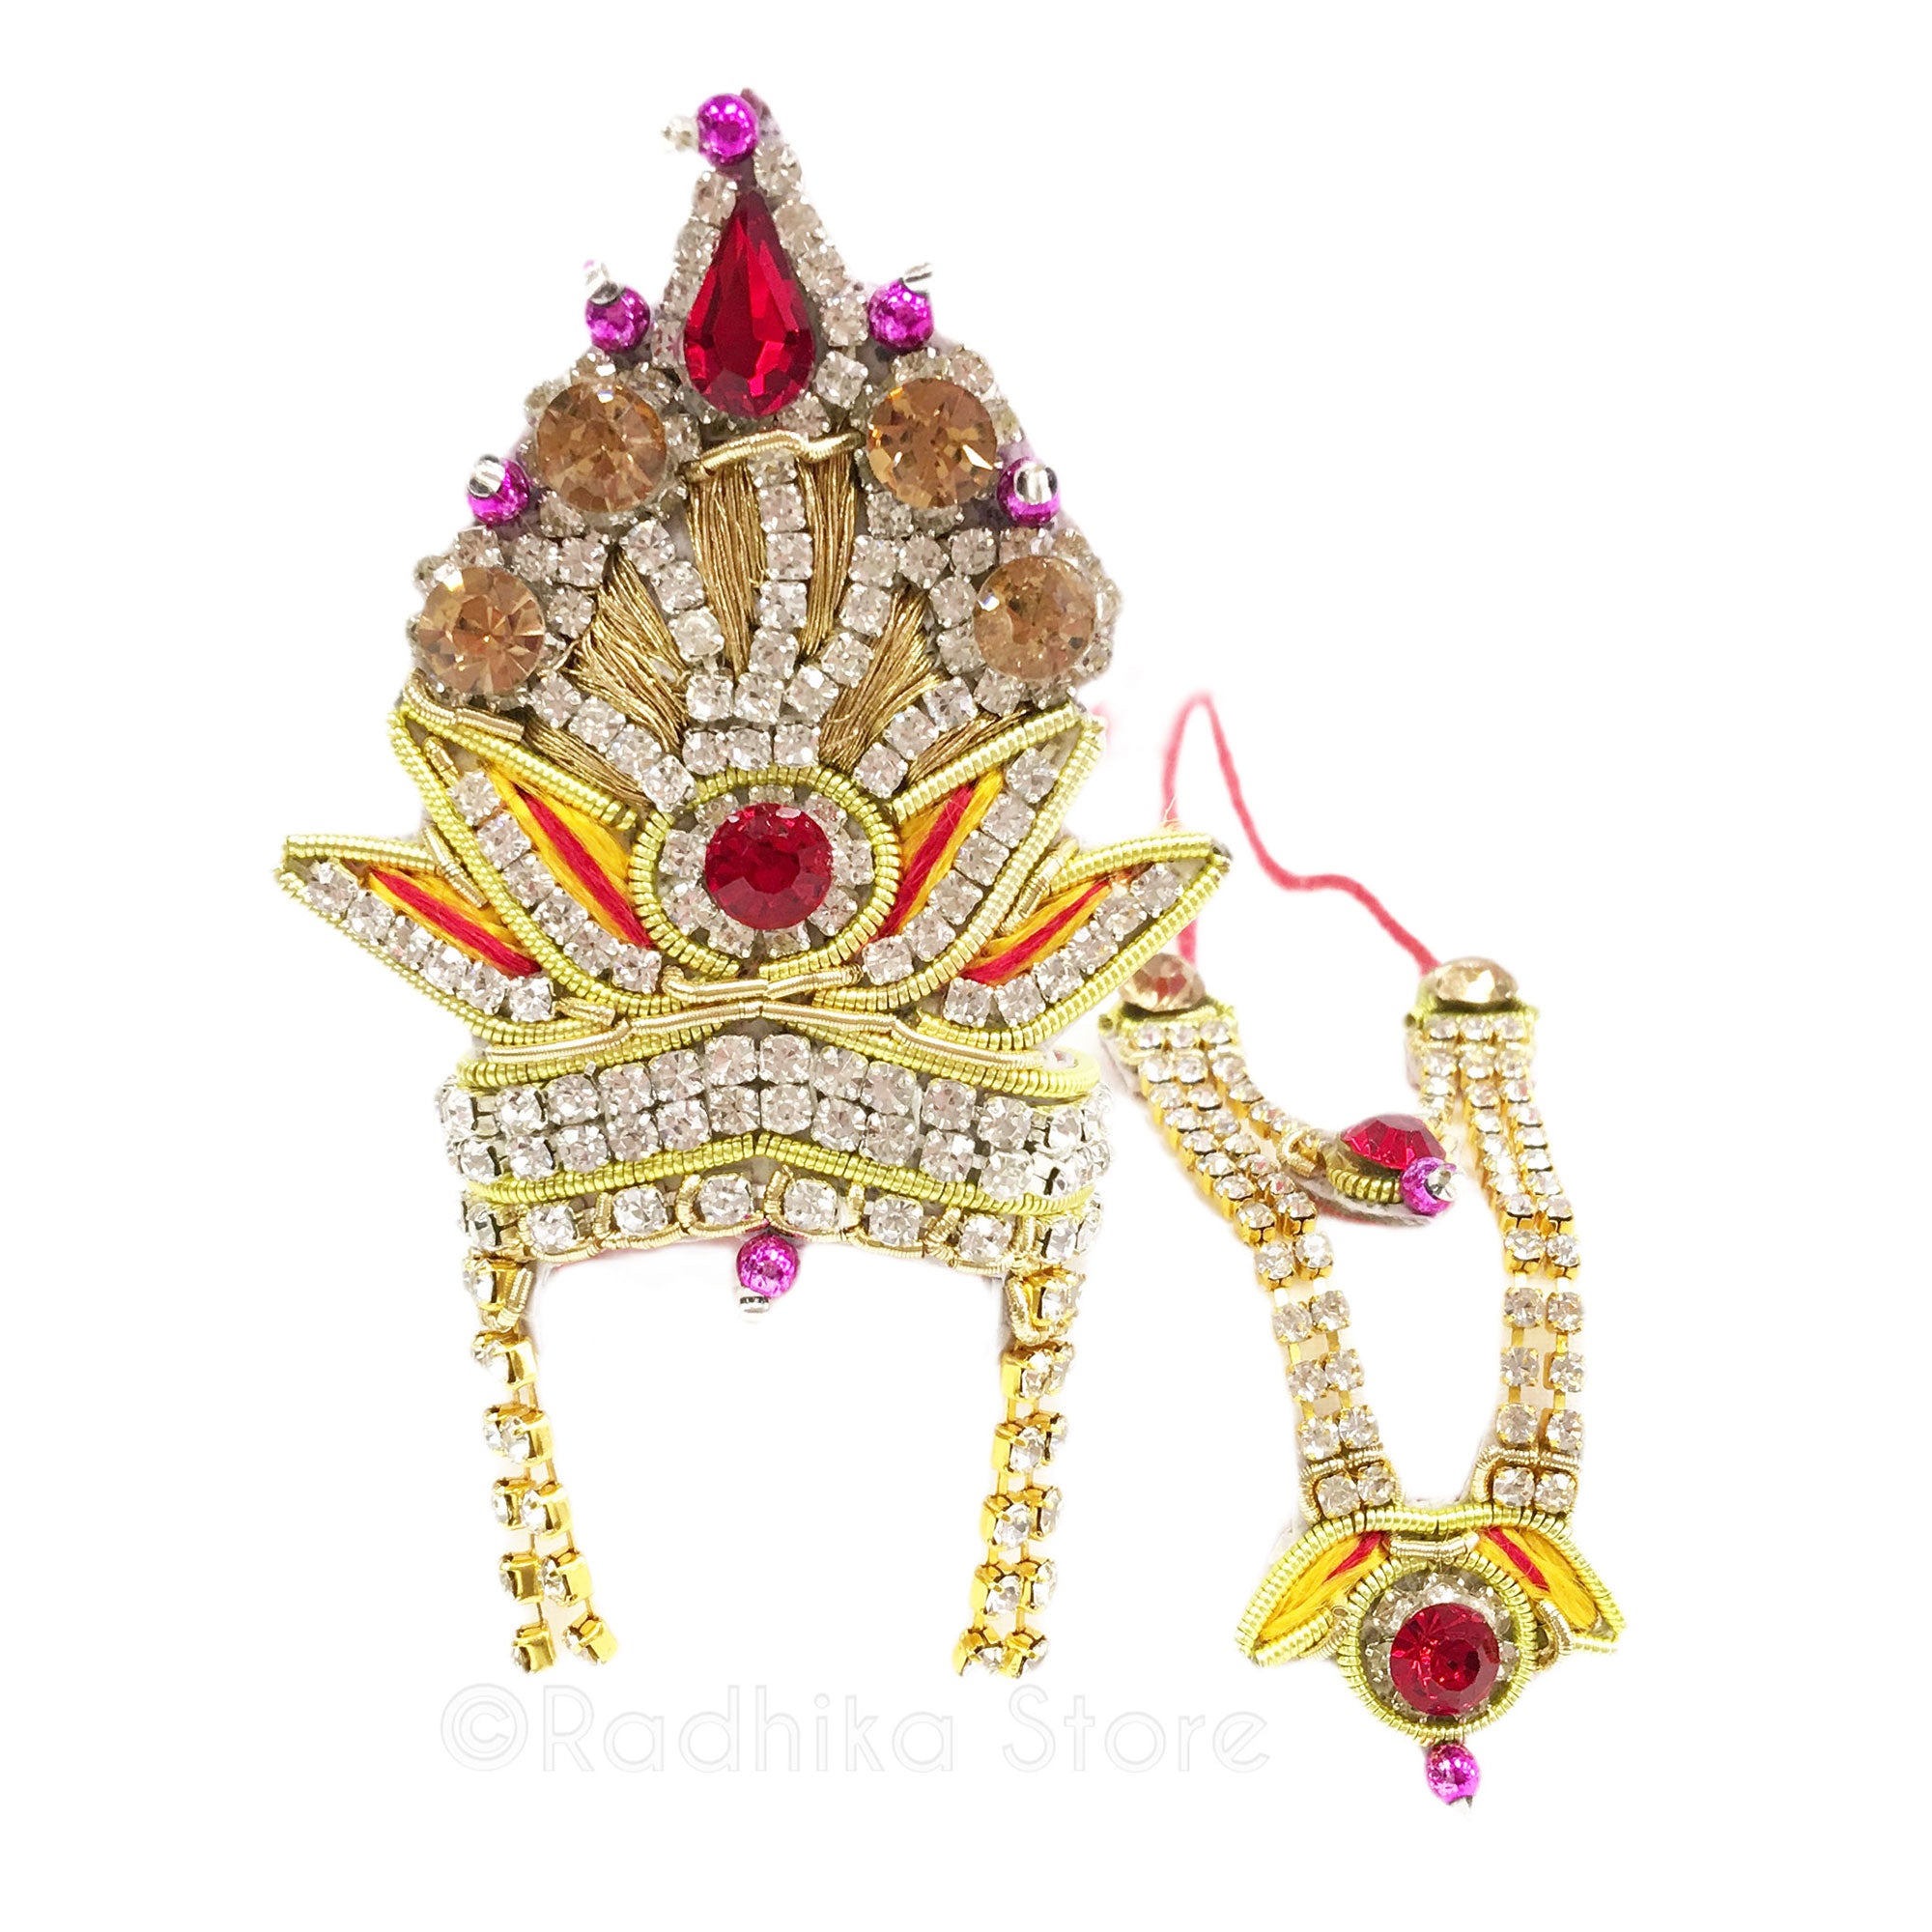 Mayapur Lotus Fountain - Deity Crown and Necklace Set